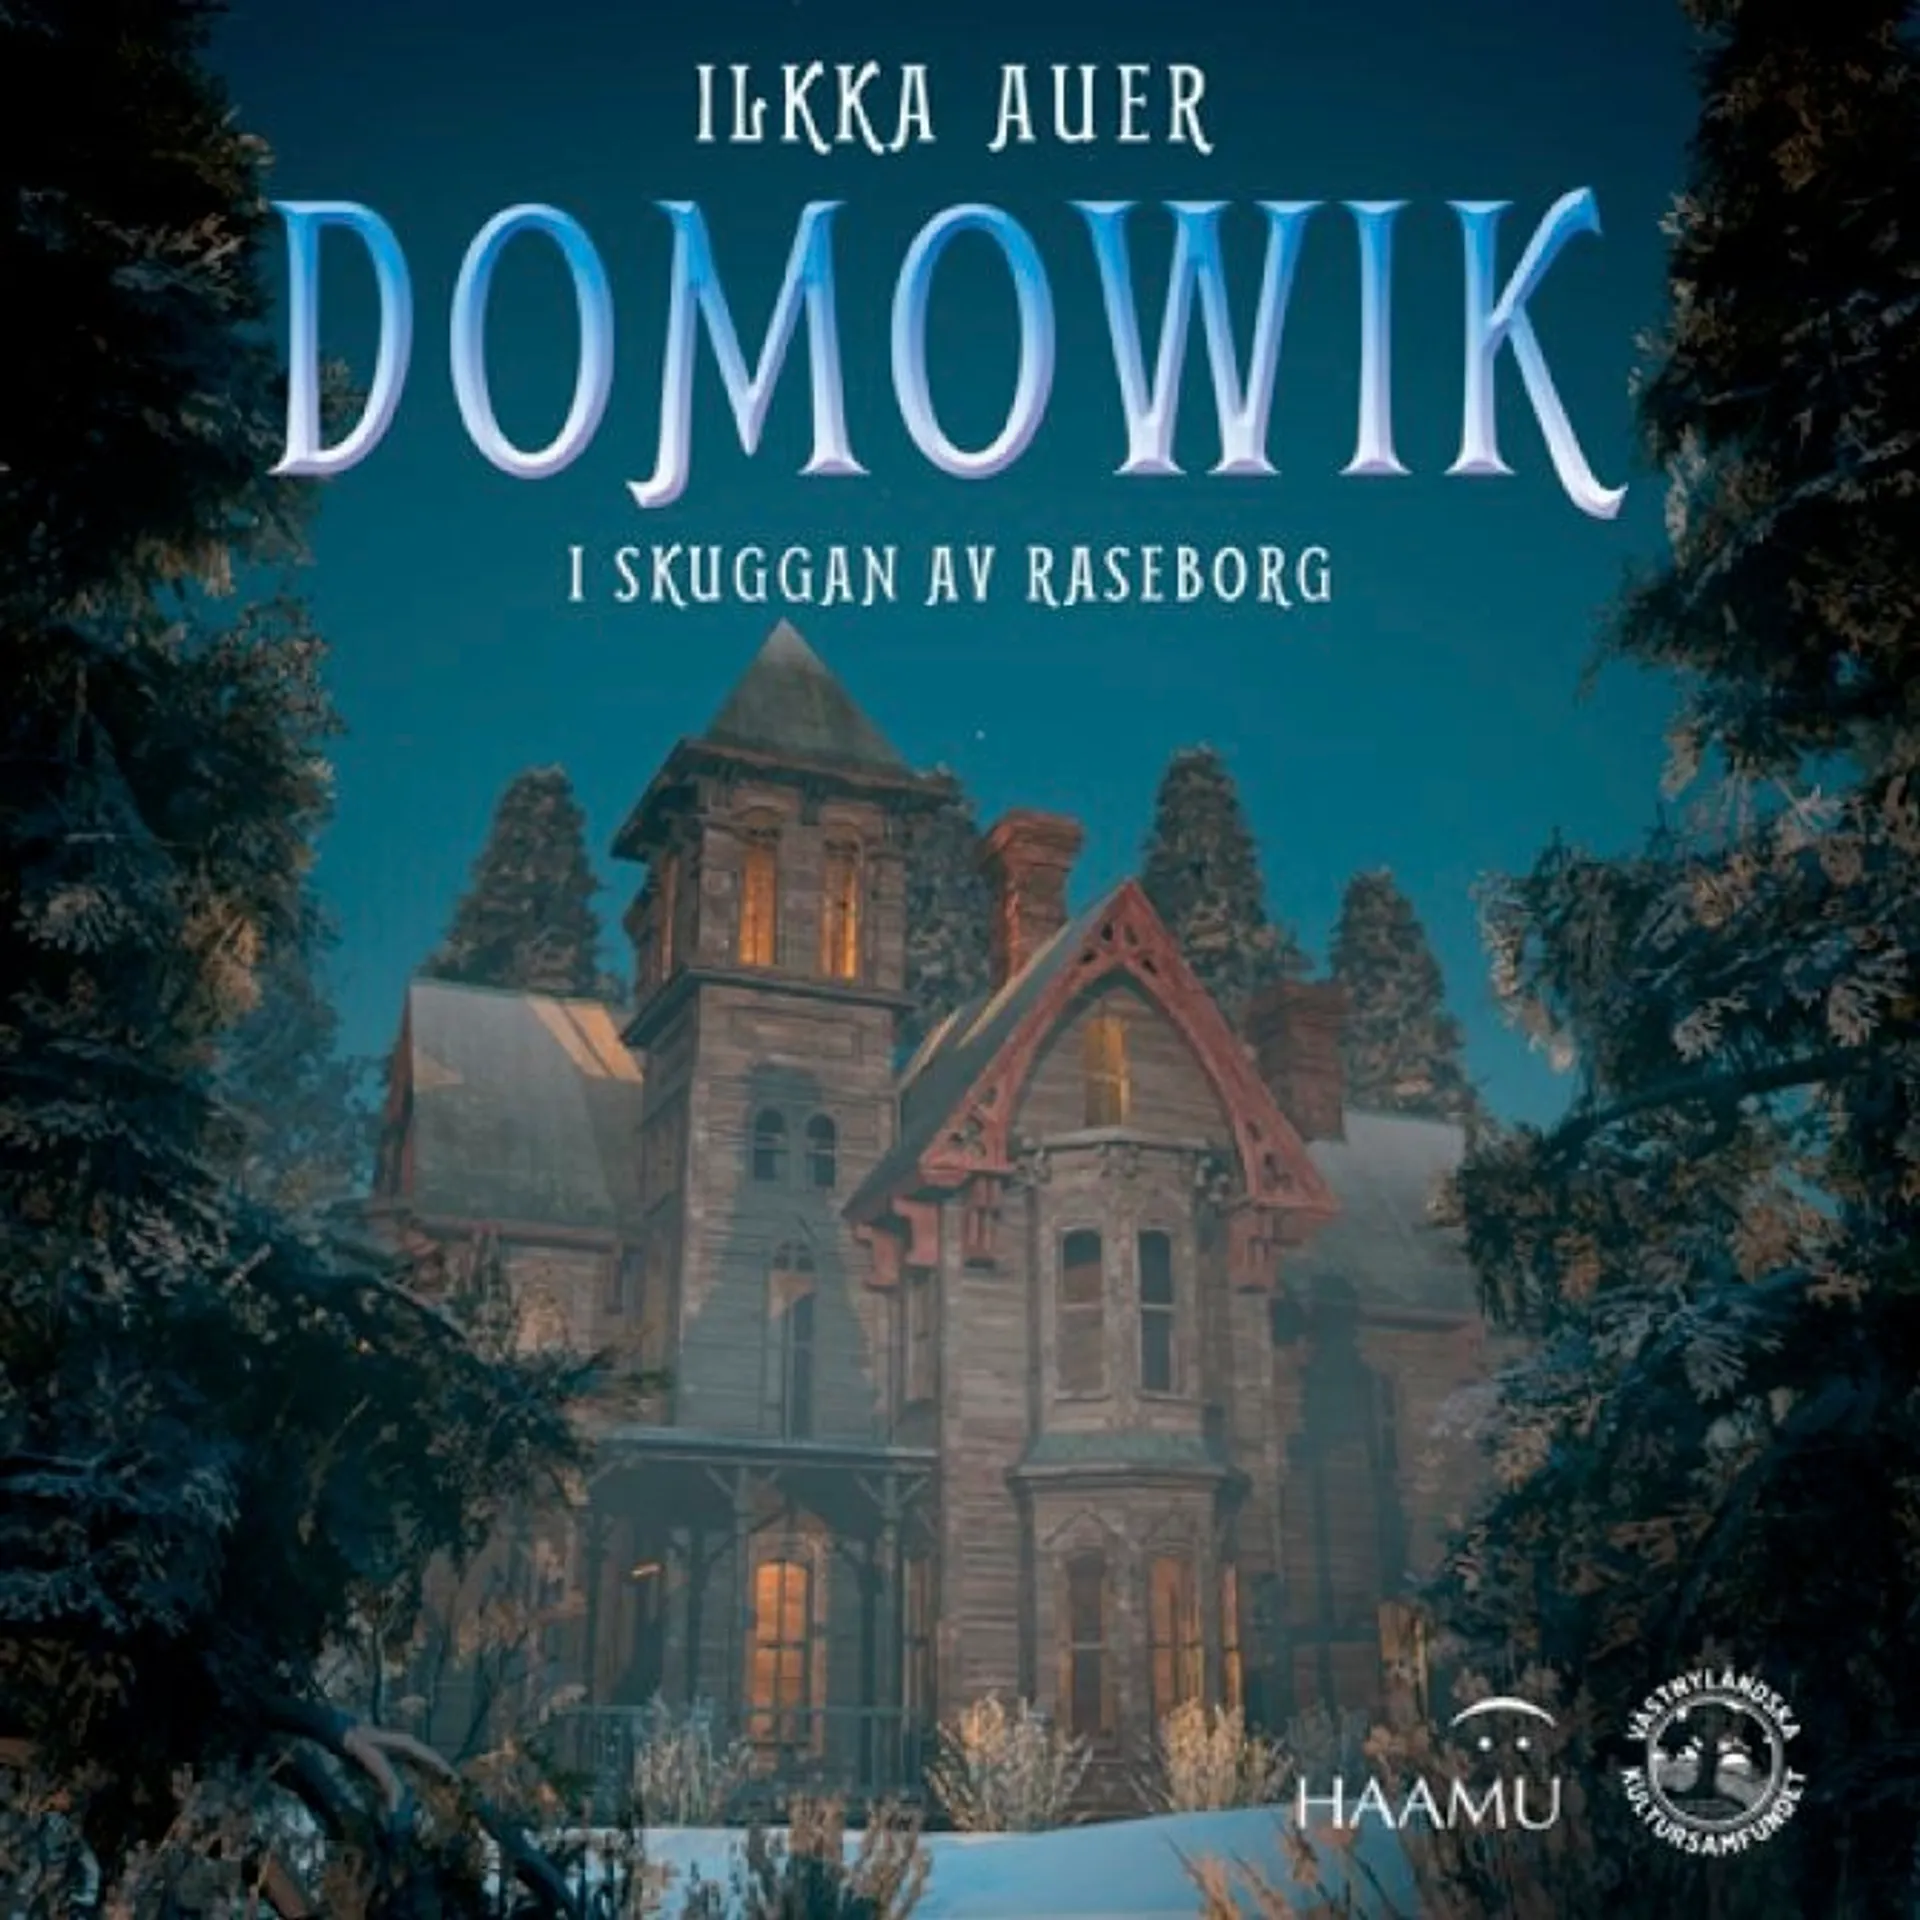 Auer, Domowik - I skuggan av Raseborg